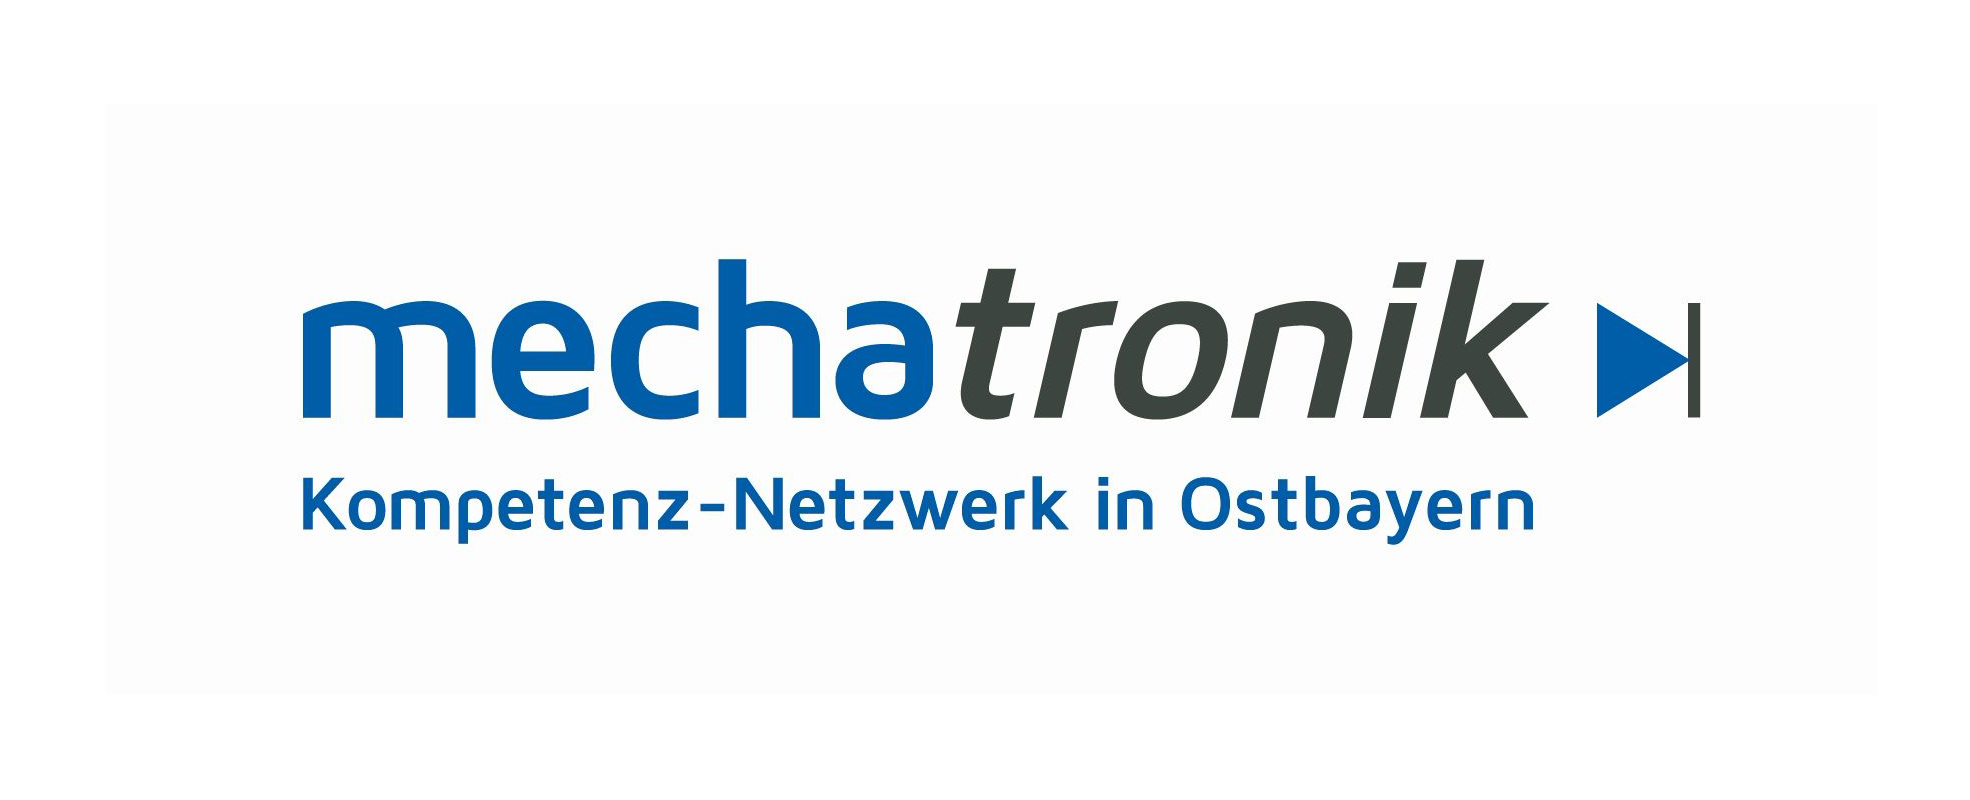 Zur externen Seite Mechatronik-Netzwerk unter www.mc-netz.de